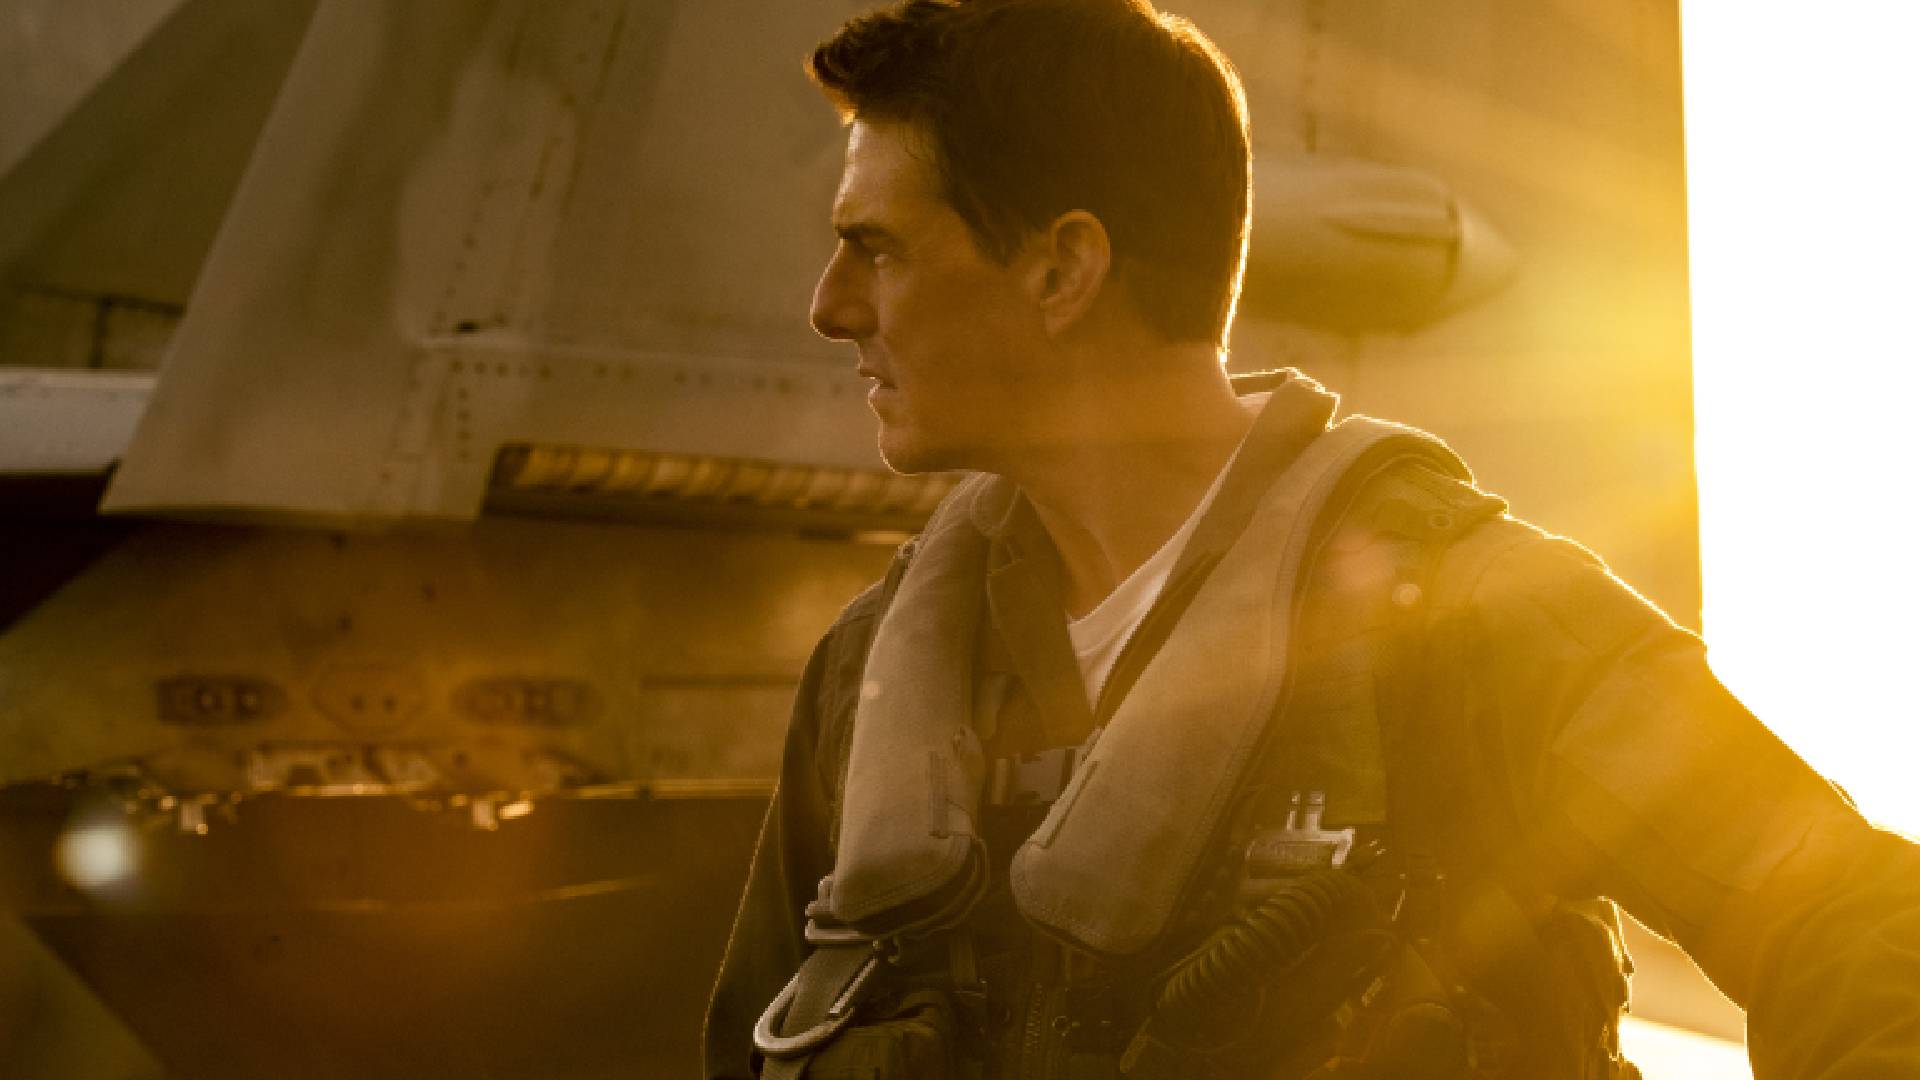 Jennifer Connelly Says Her Top Gun Costar Tom Cruise Deserves an Oscar Nom